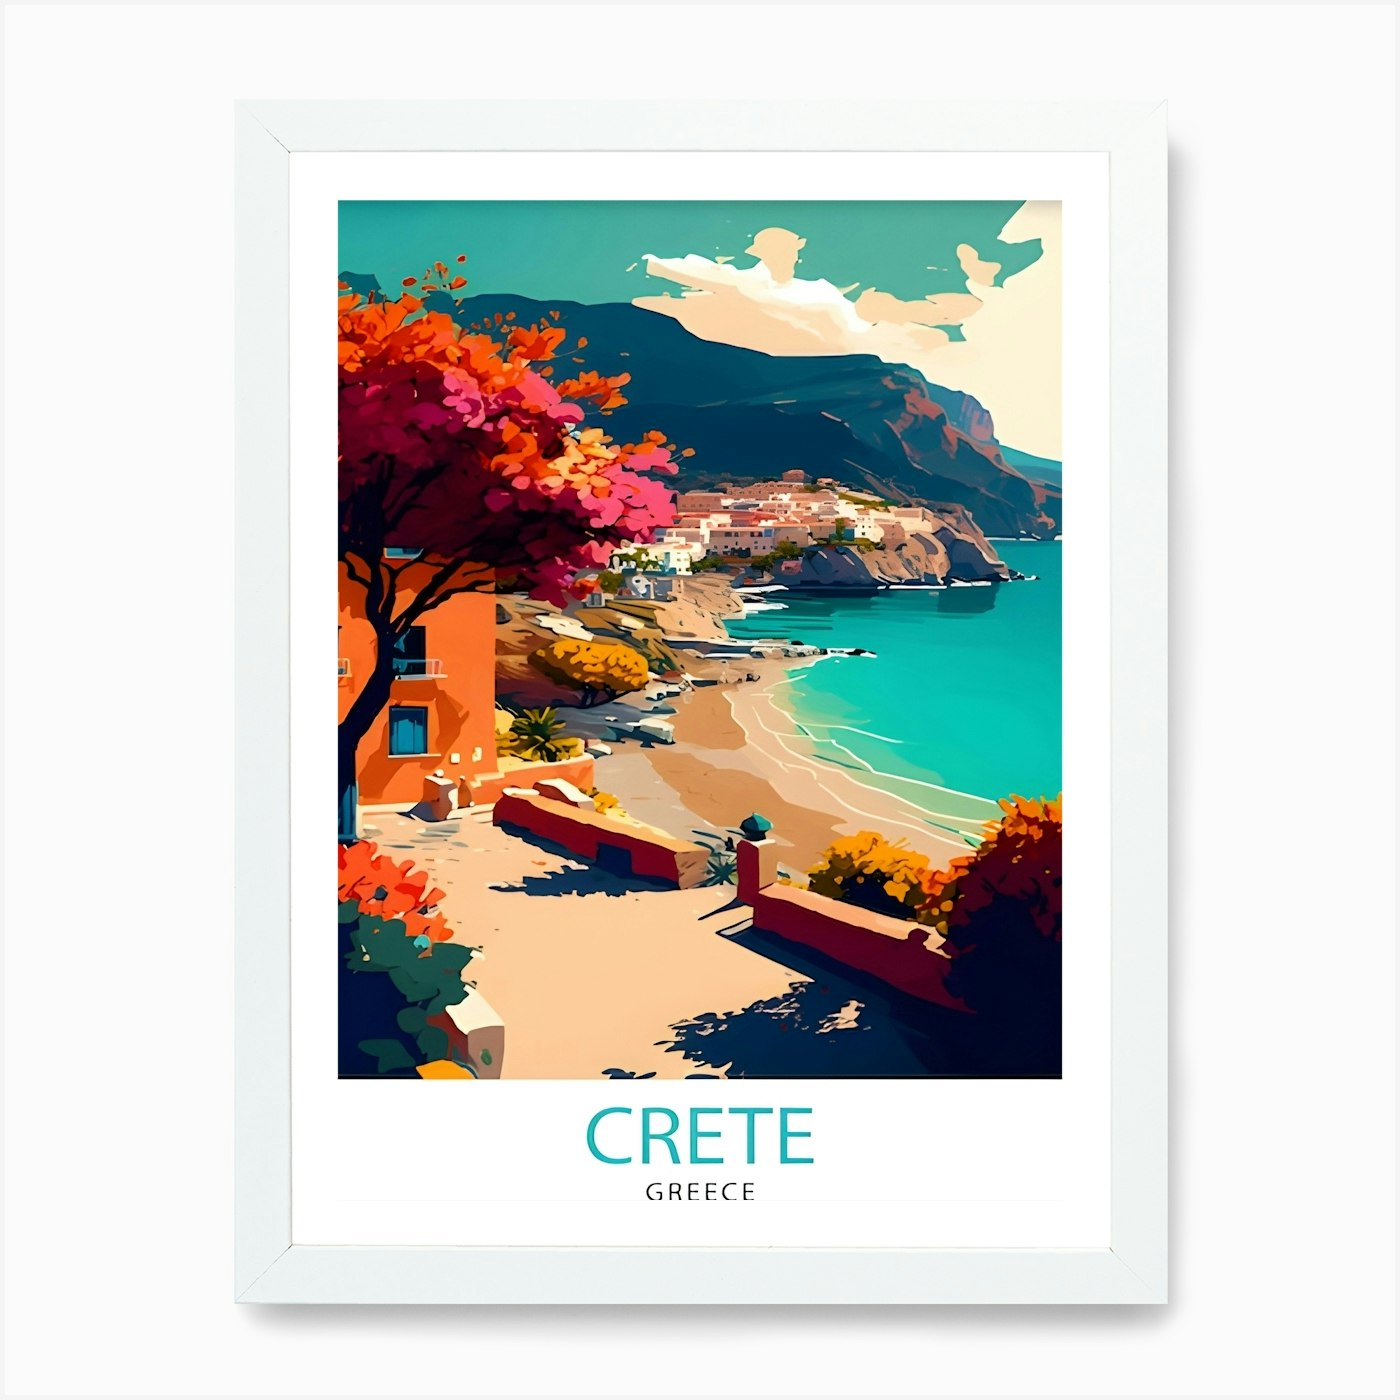 Capri Italy Travel Poster 3 Art Print